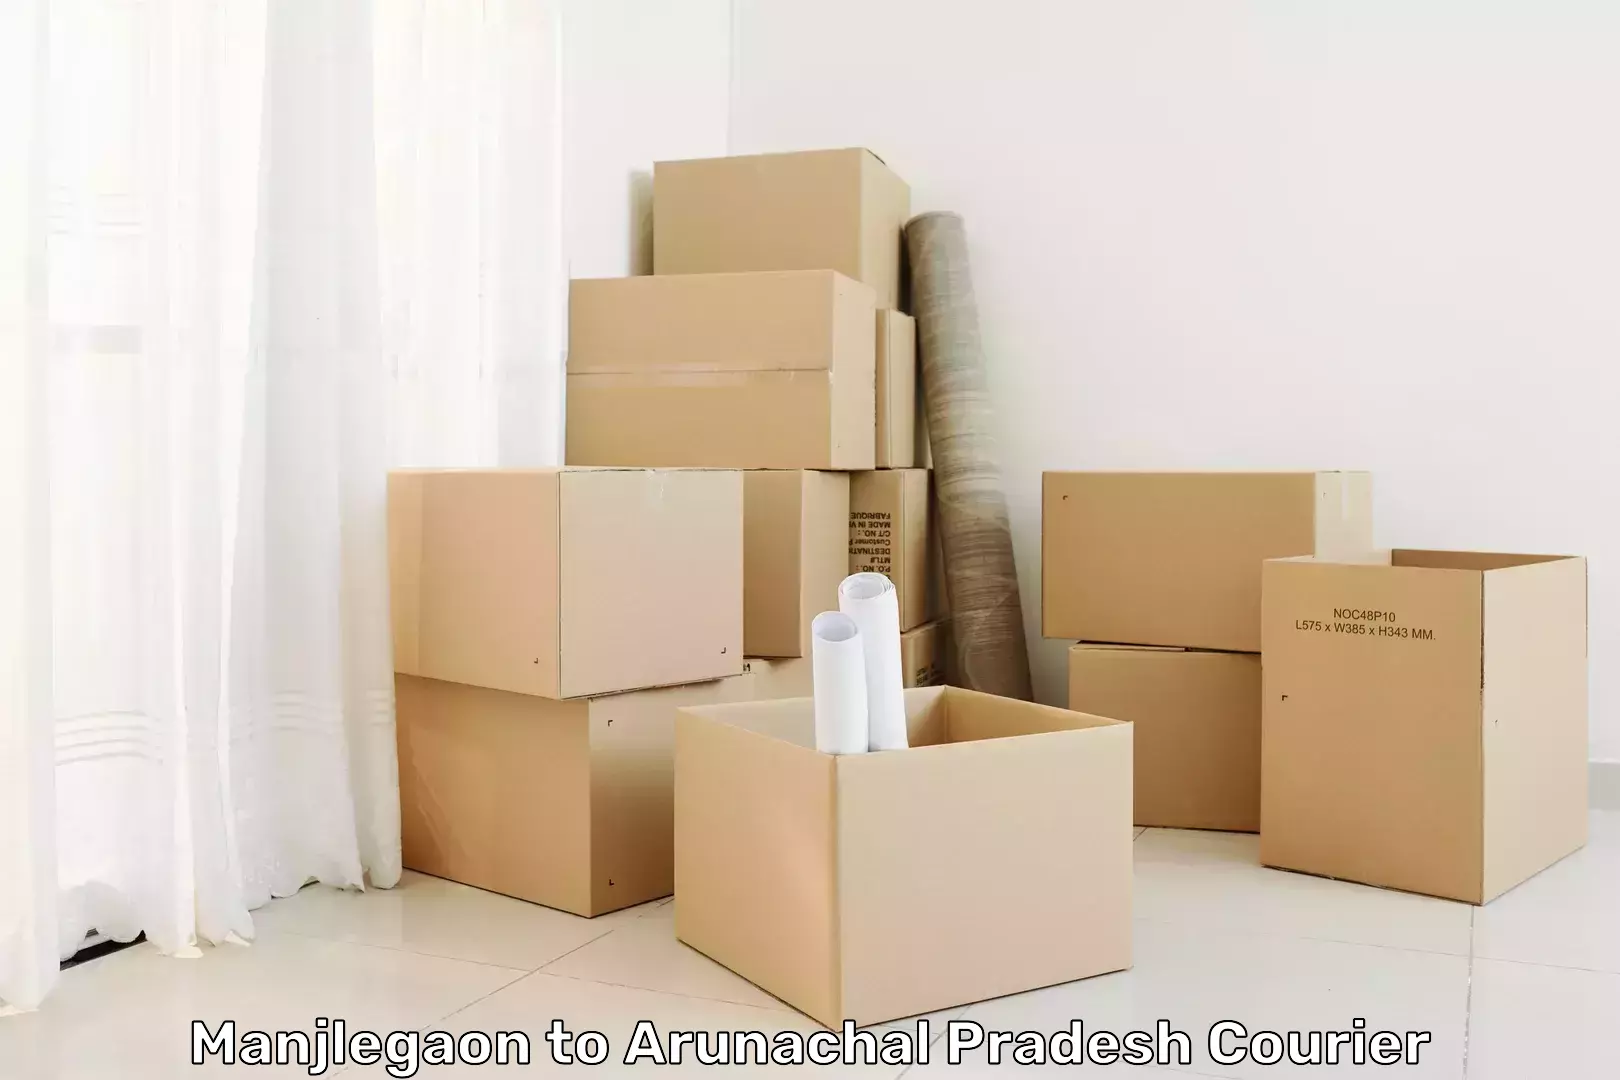 Professional parcel services Manjlegaon to Arunachal Pradesh